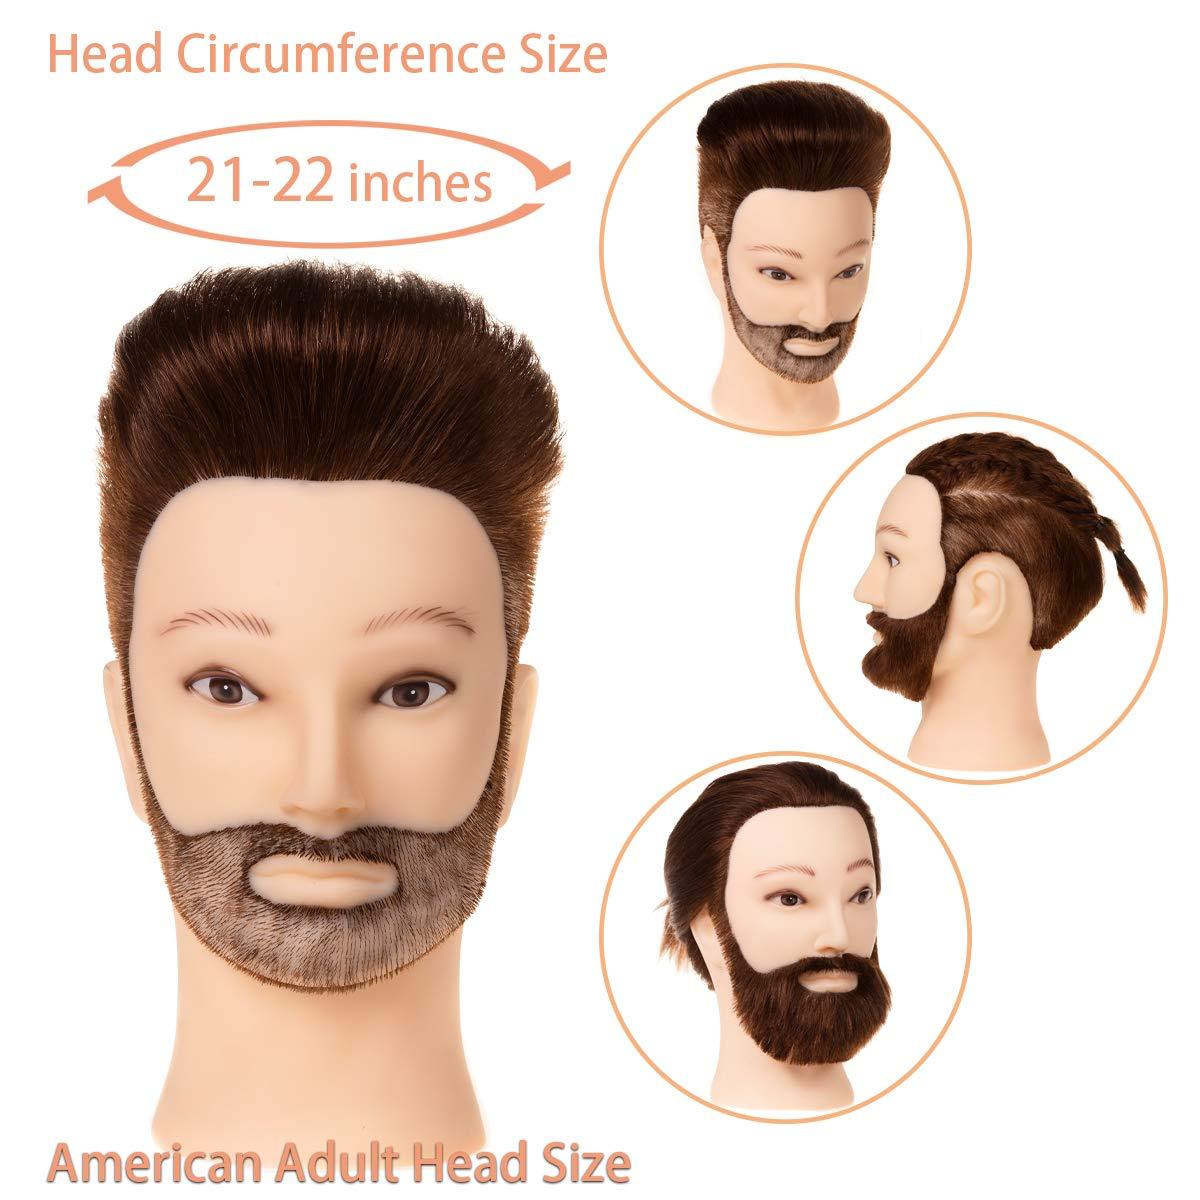 Richard Mannequin Head Male Standard Training Premium 100% Human Hair at